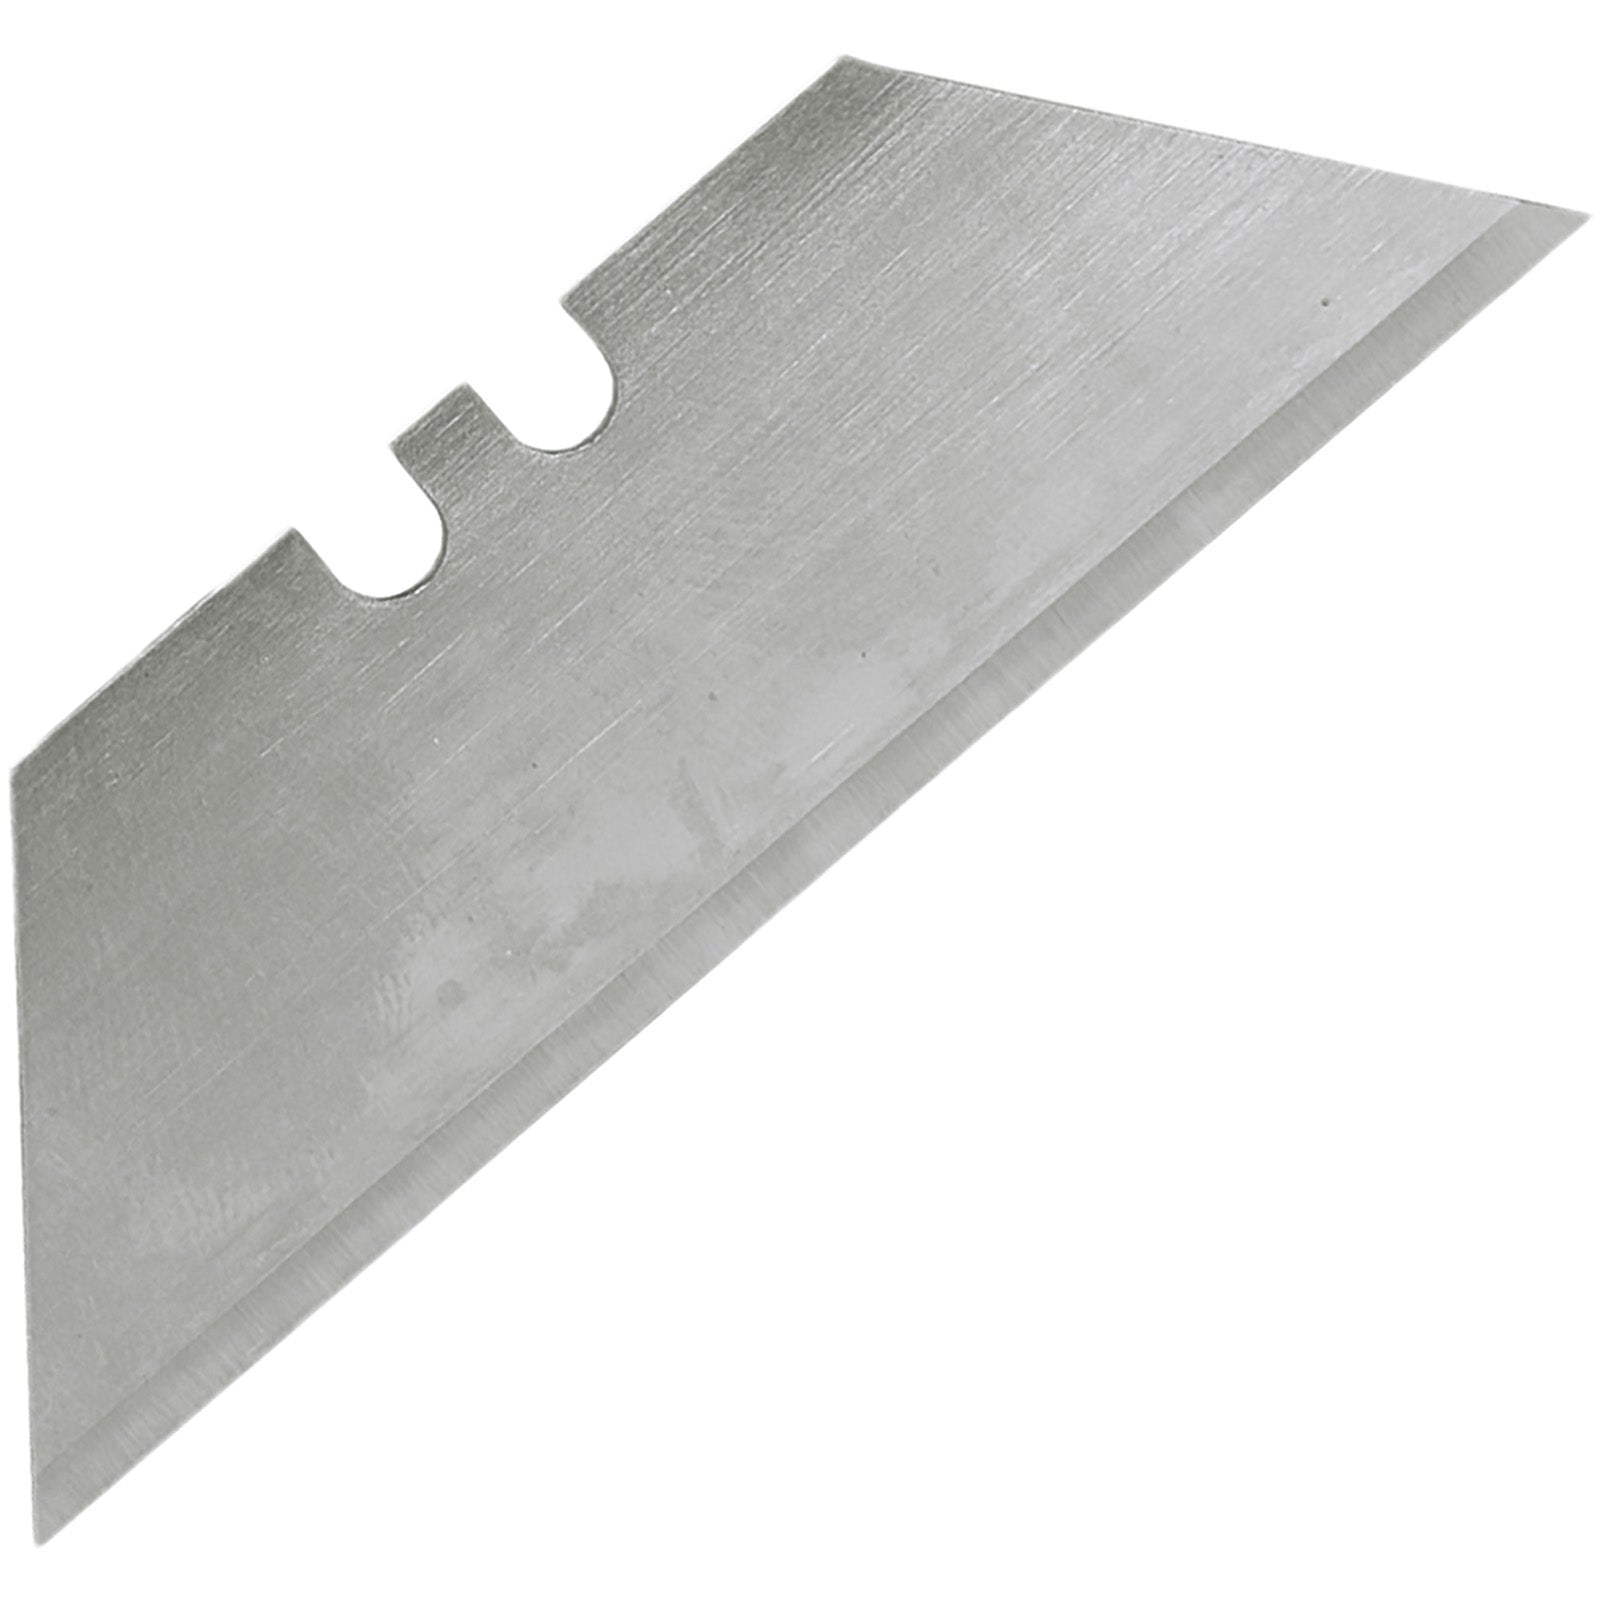 Silverline 100 Piece Utility Knife Blades